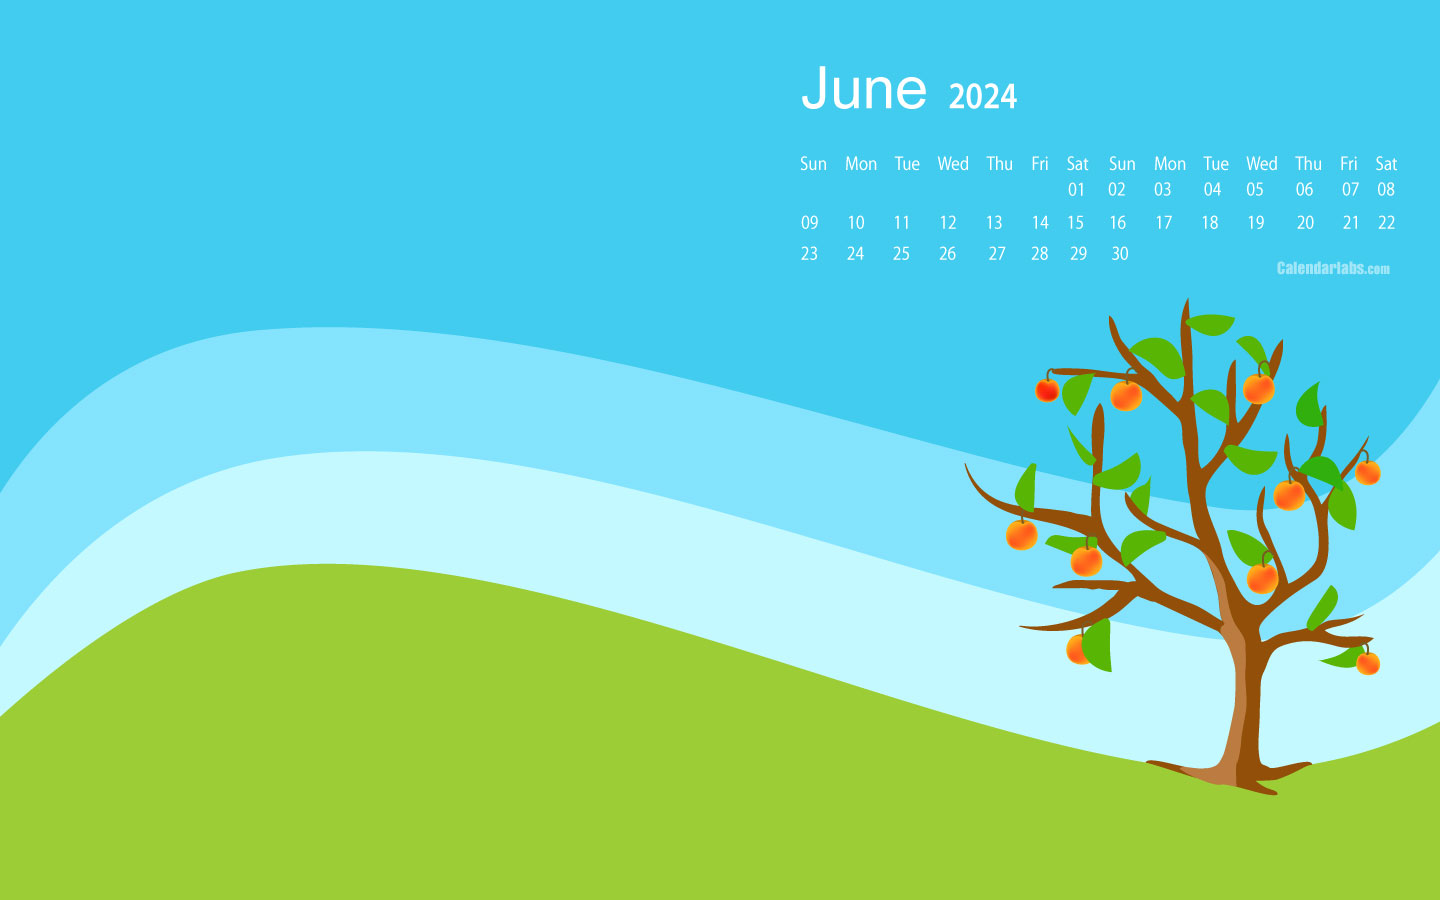 June 2024 Desktop Wallpaper Calendar CalendarLabs